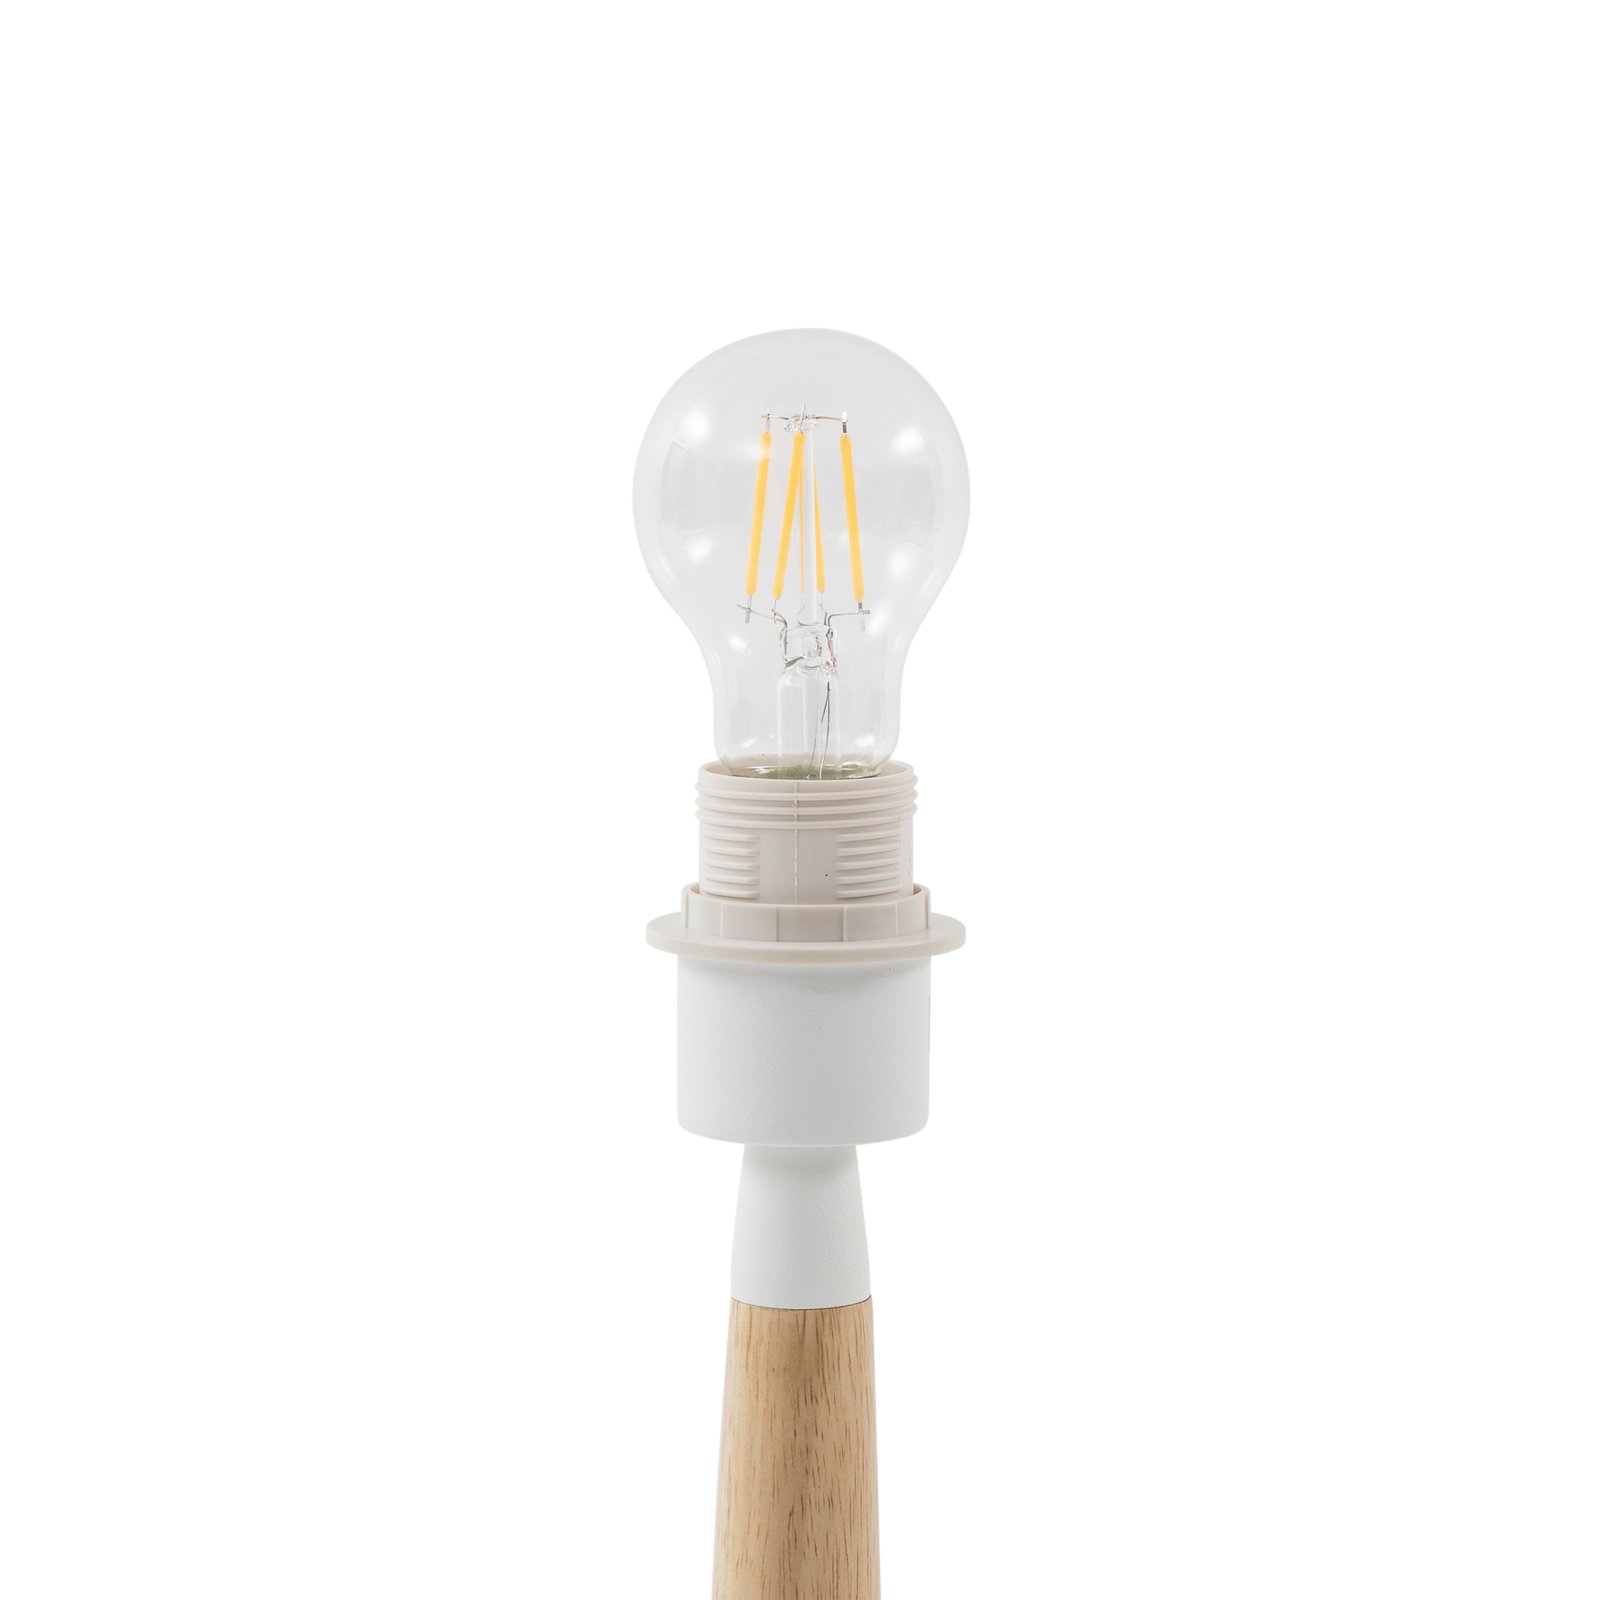 Lucande lampe à poser Ellorin, blanc, bois, Ø 37 cm, E27